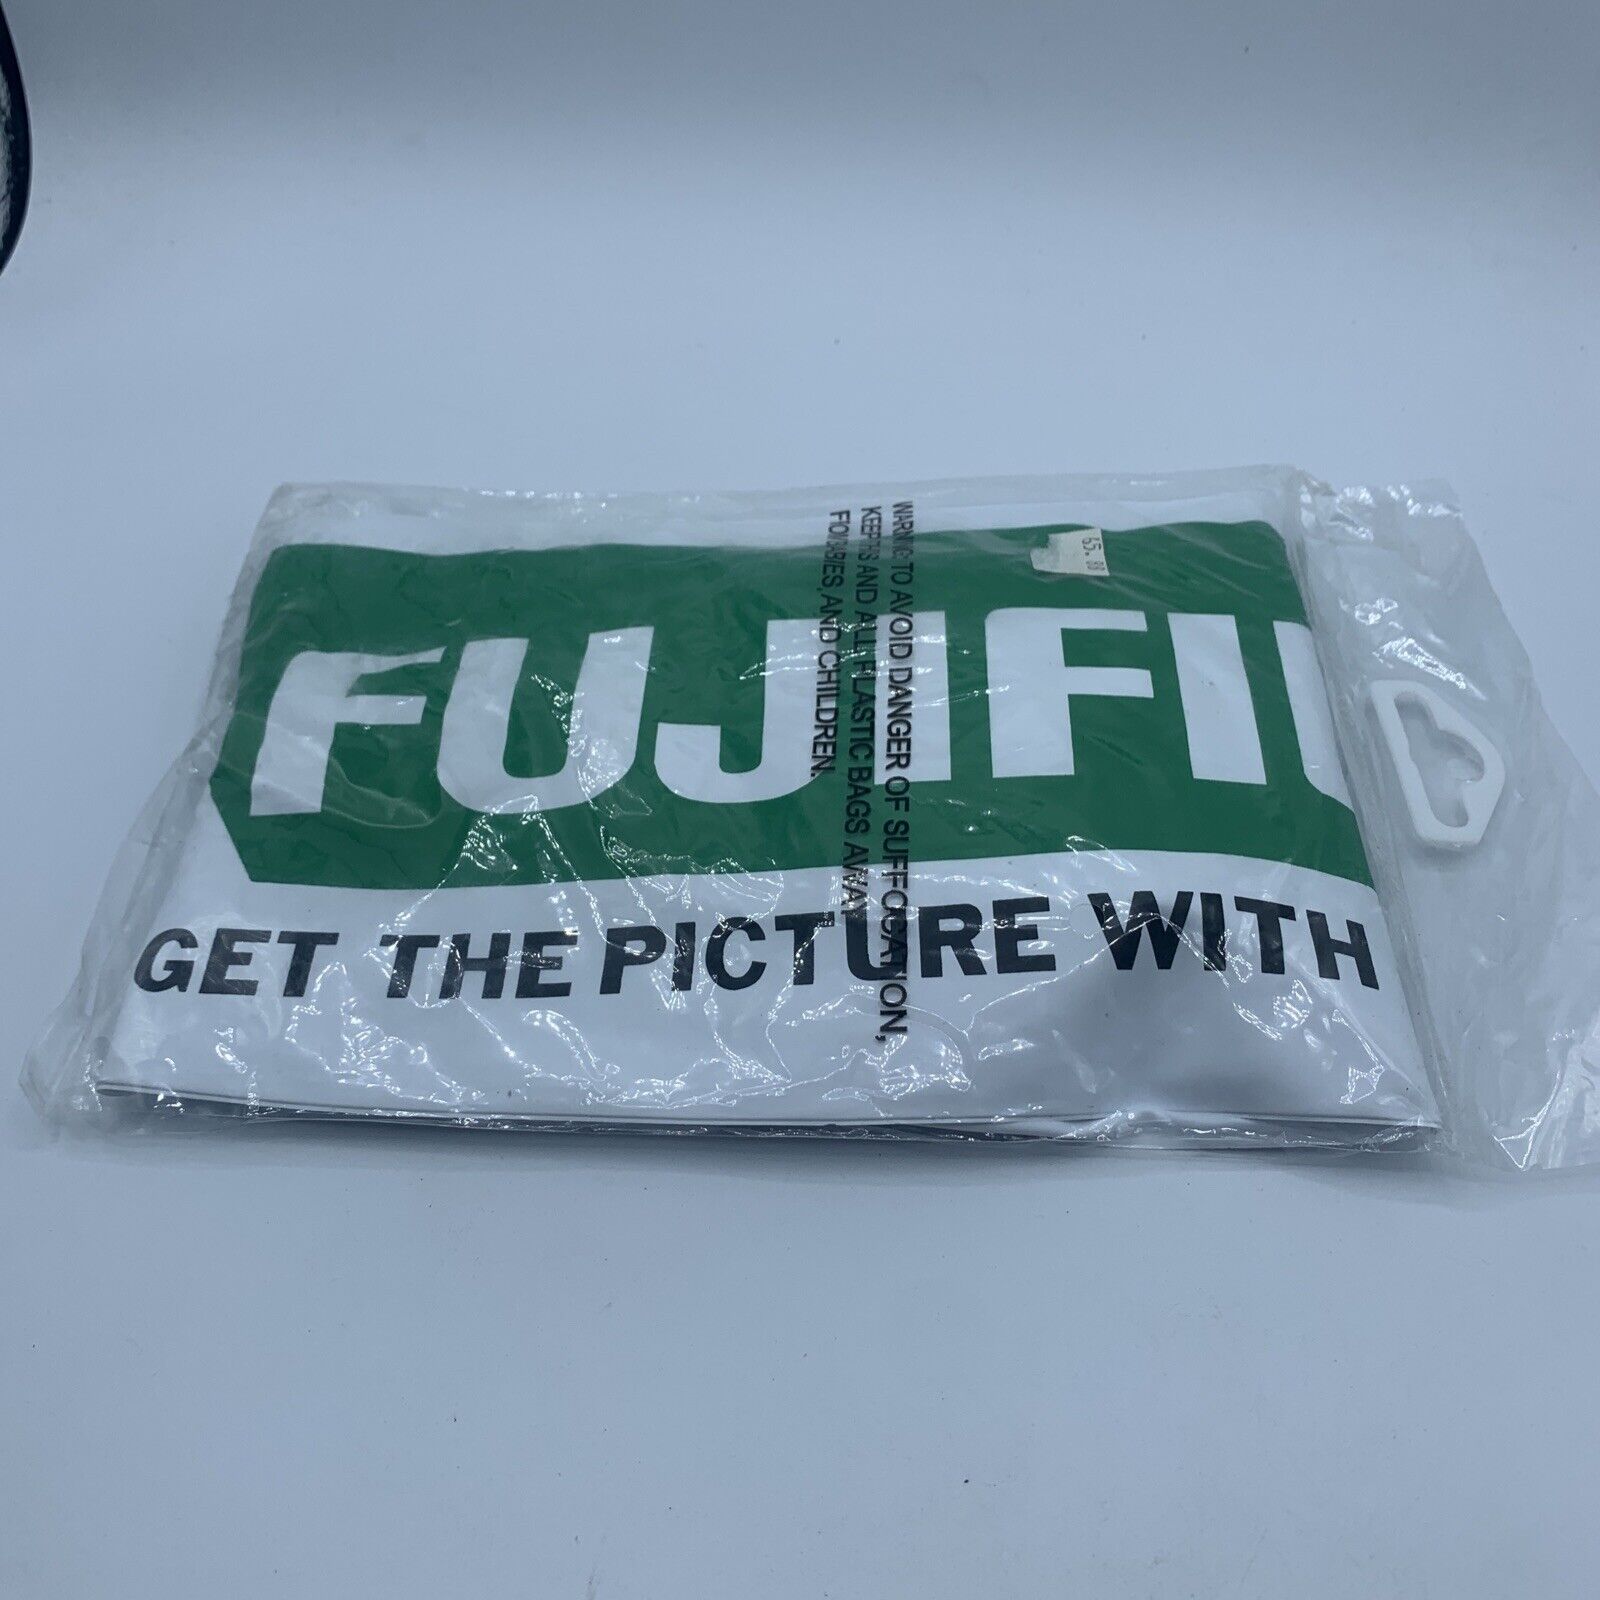 NOS Fujifilm Fuji Inflatables 1990s New Old Stock Blimp air ship Store Display